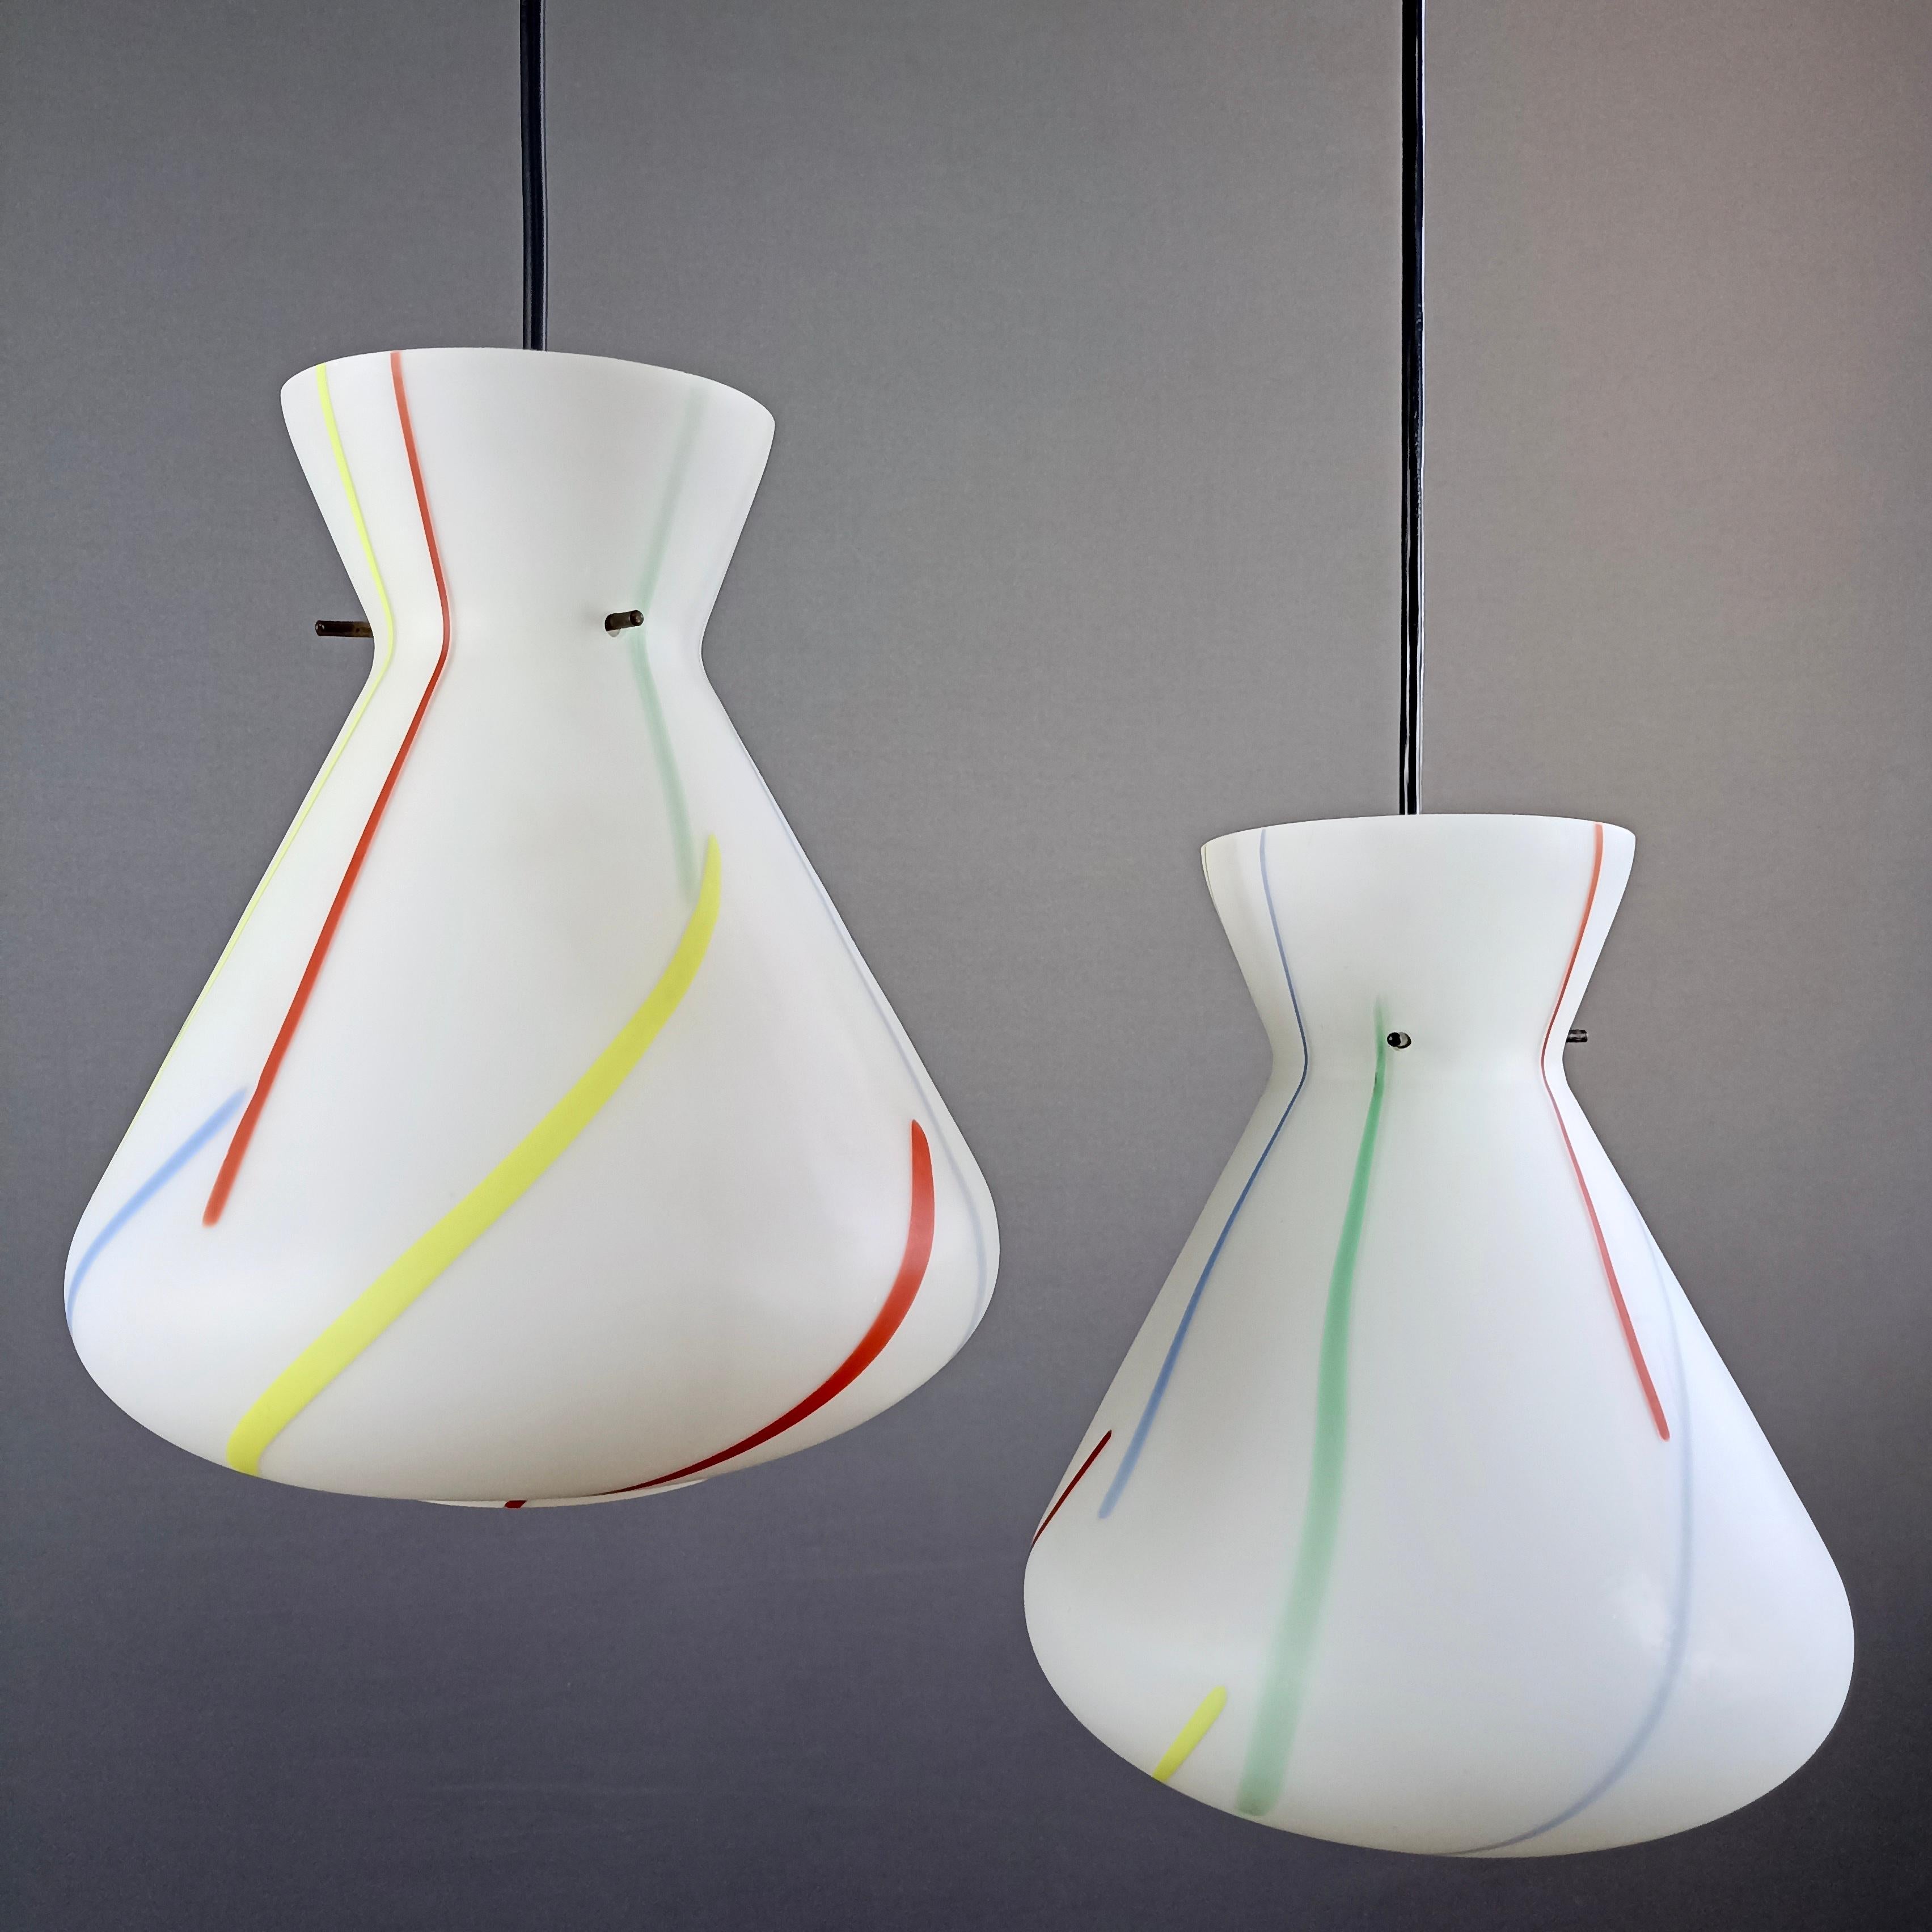 Italian 1950s Stilnovo Style Multi-Color Opaline Glass One-Light Pendant Lamps. A pair. For Sale